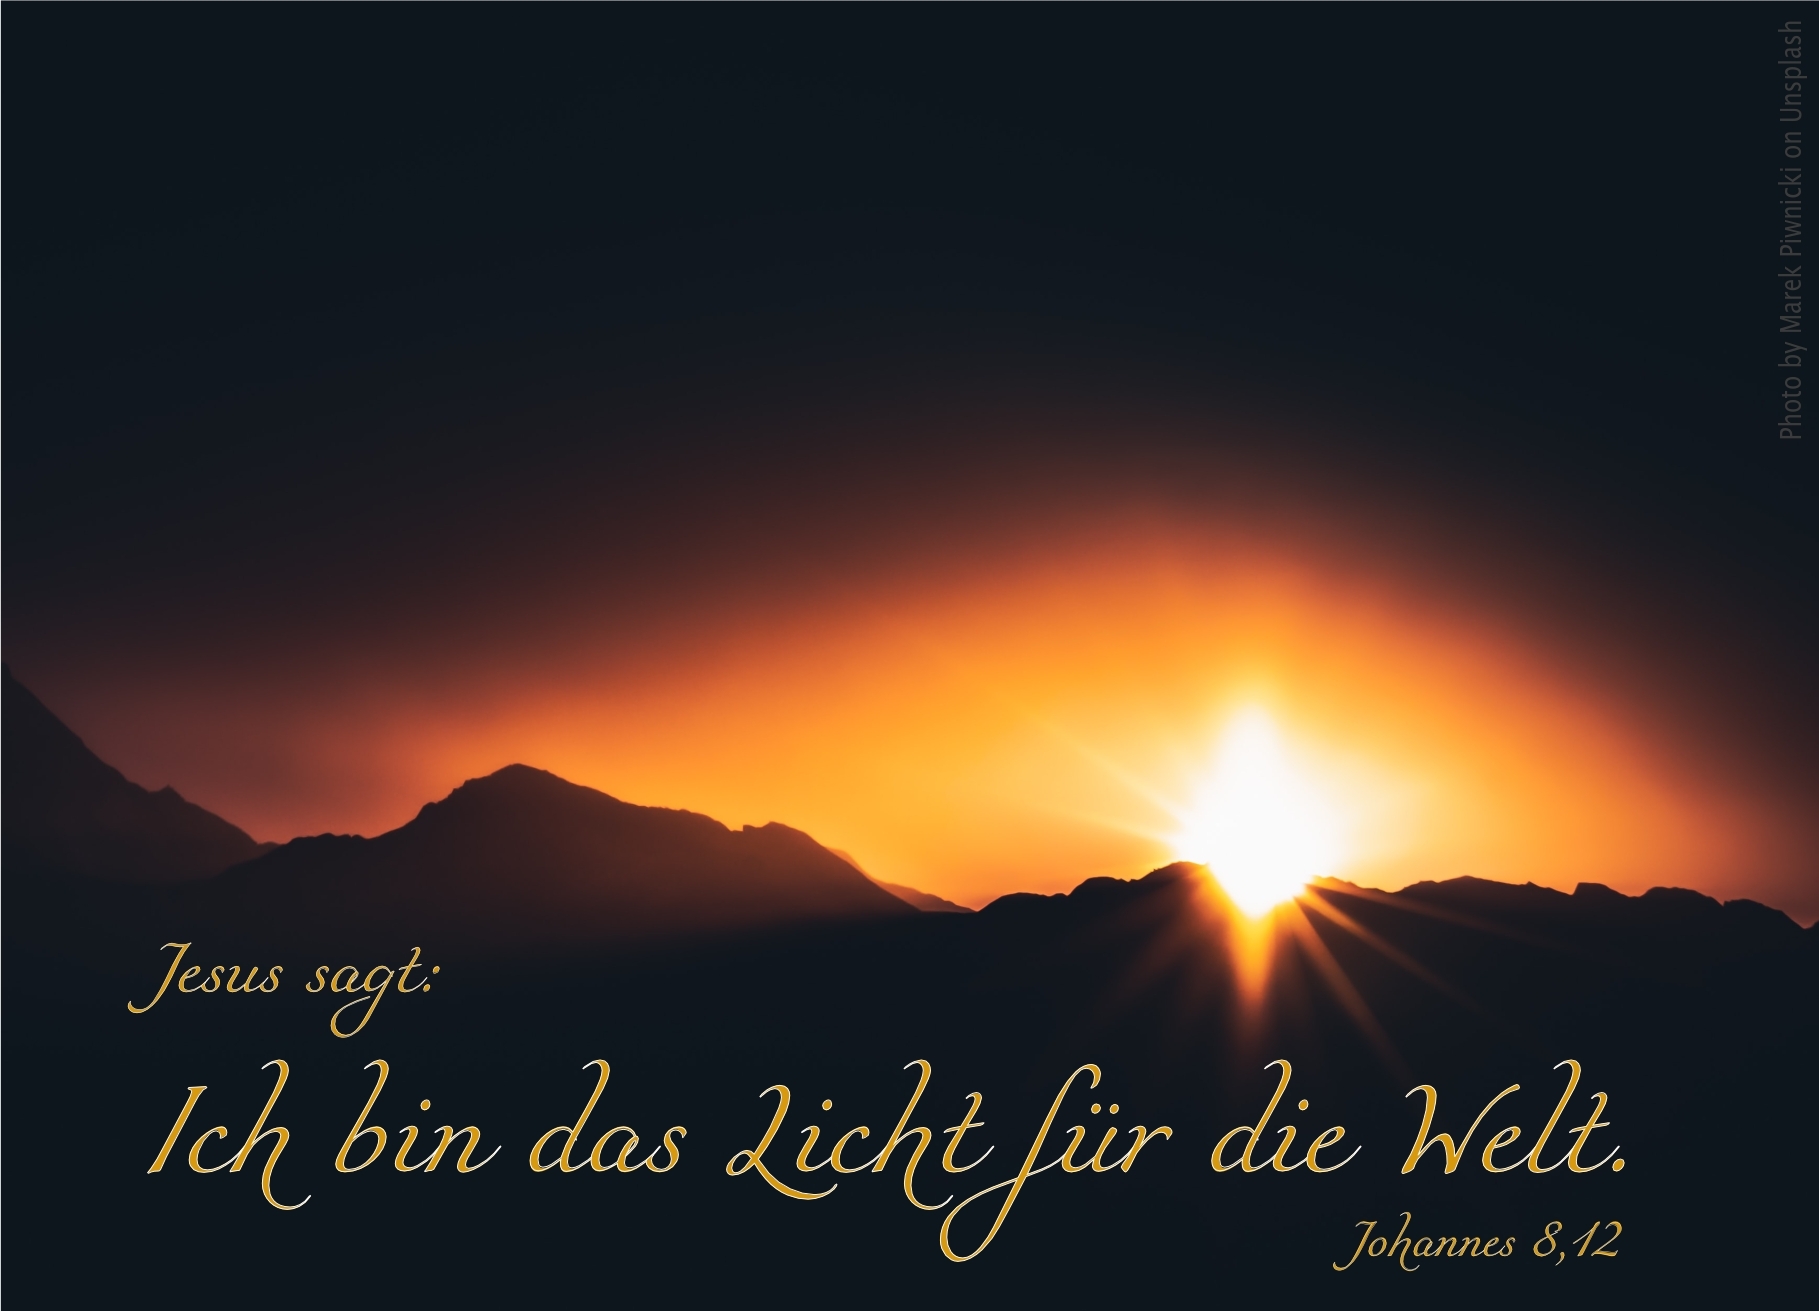 alt="Sonnenuntergang_ueber_Gebirge_erwartet_bibelhoerbuch_jesus_das_licht_der_welt"